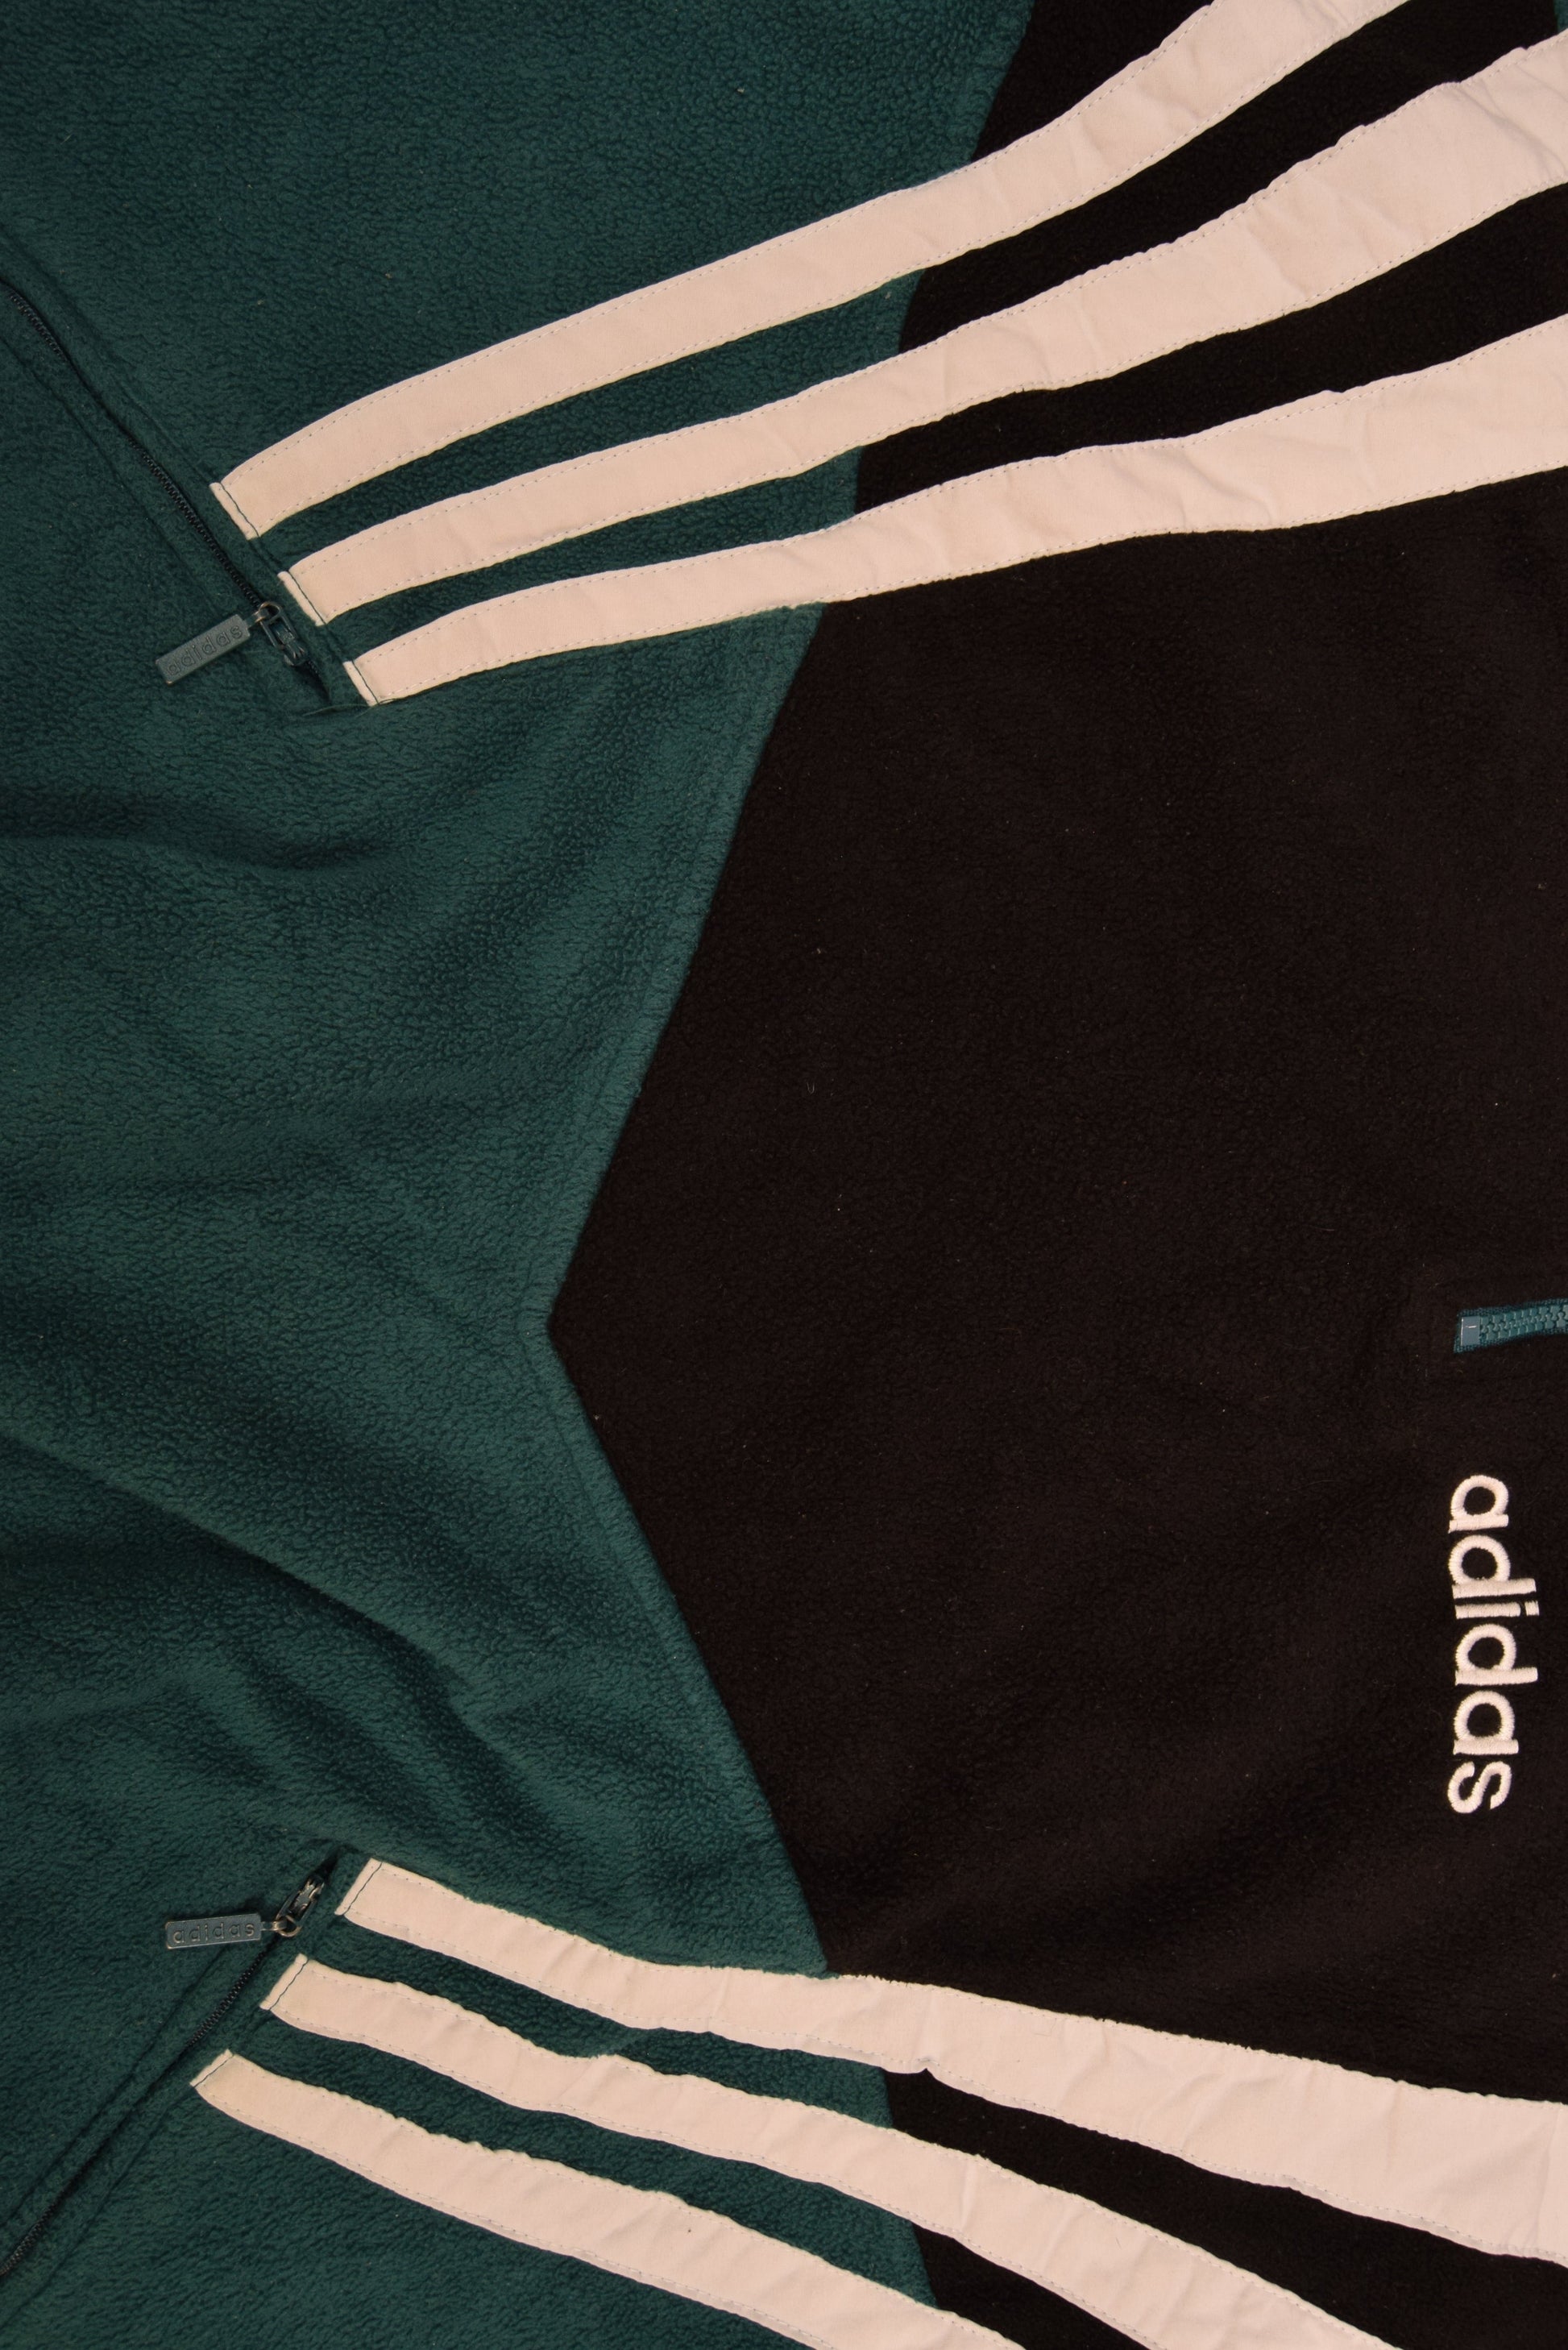 Vintage 90's Adidas Fleece Green Black Size M